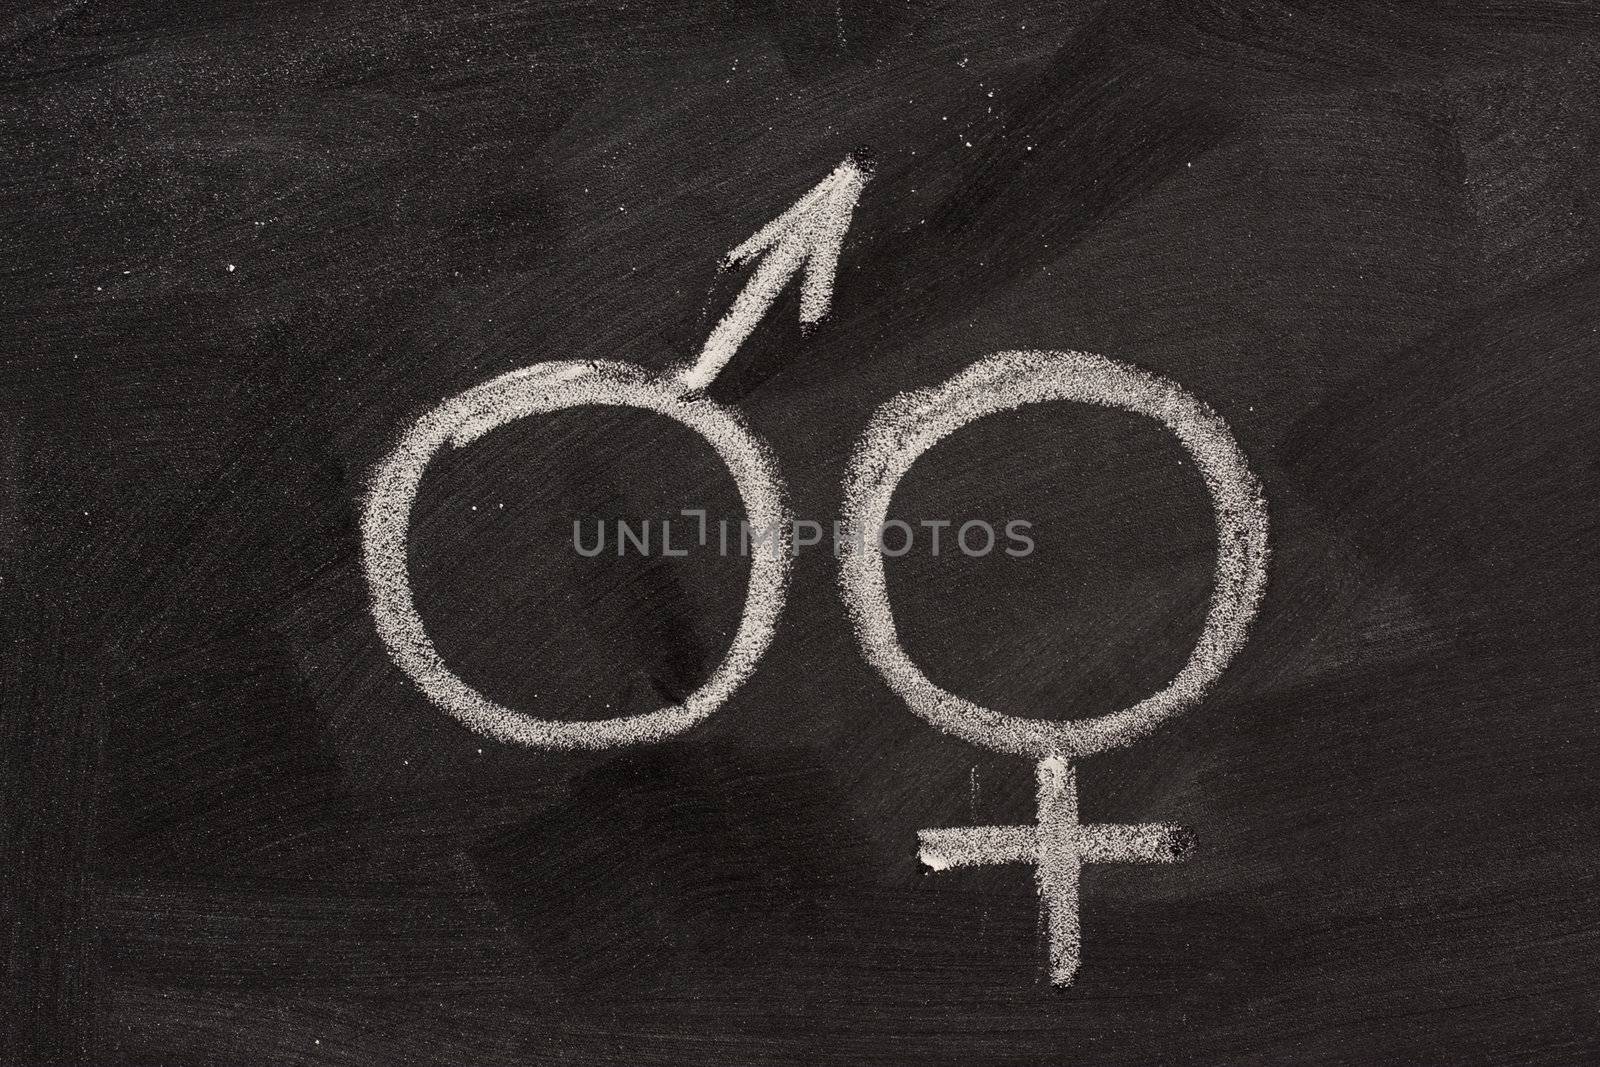 male and female gender symbols, mars and venus, drawn with white chlak on blackboard